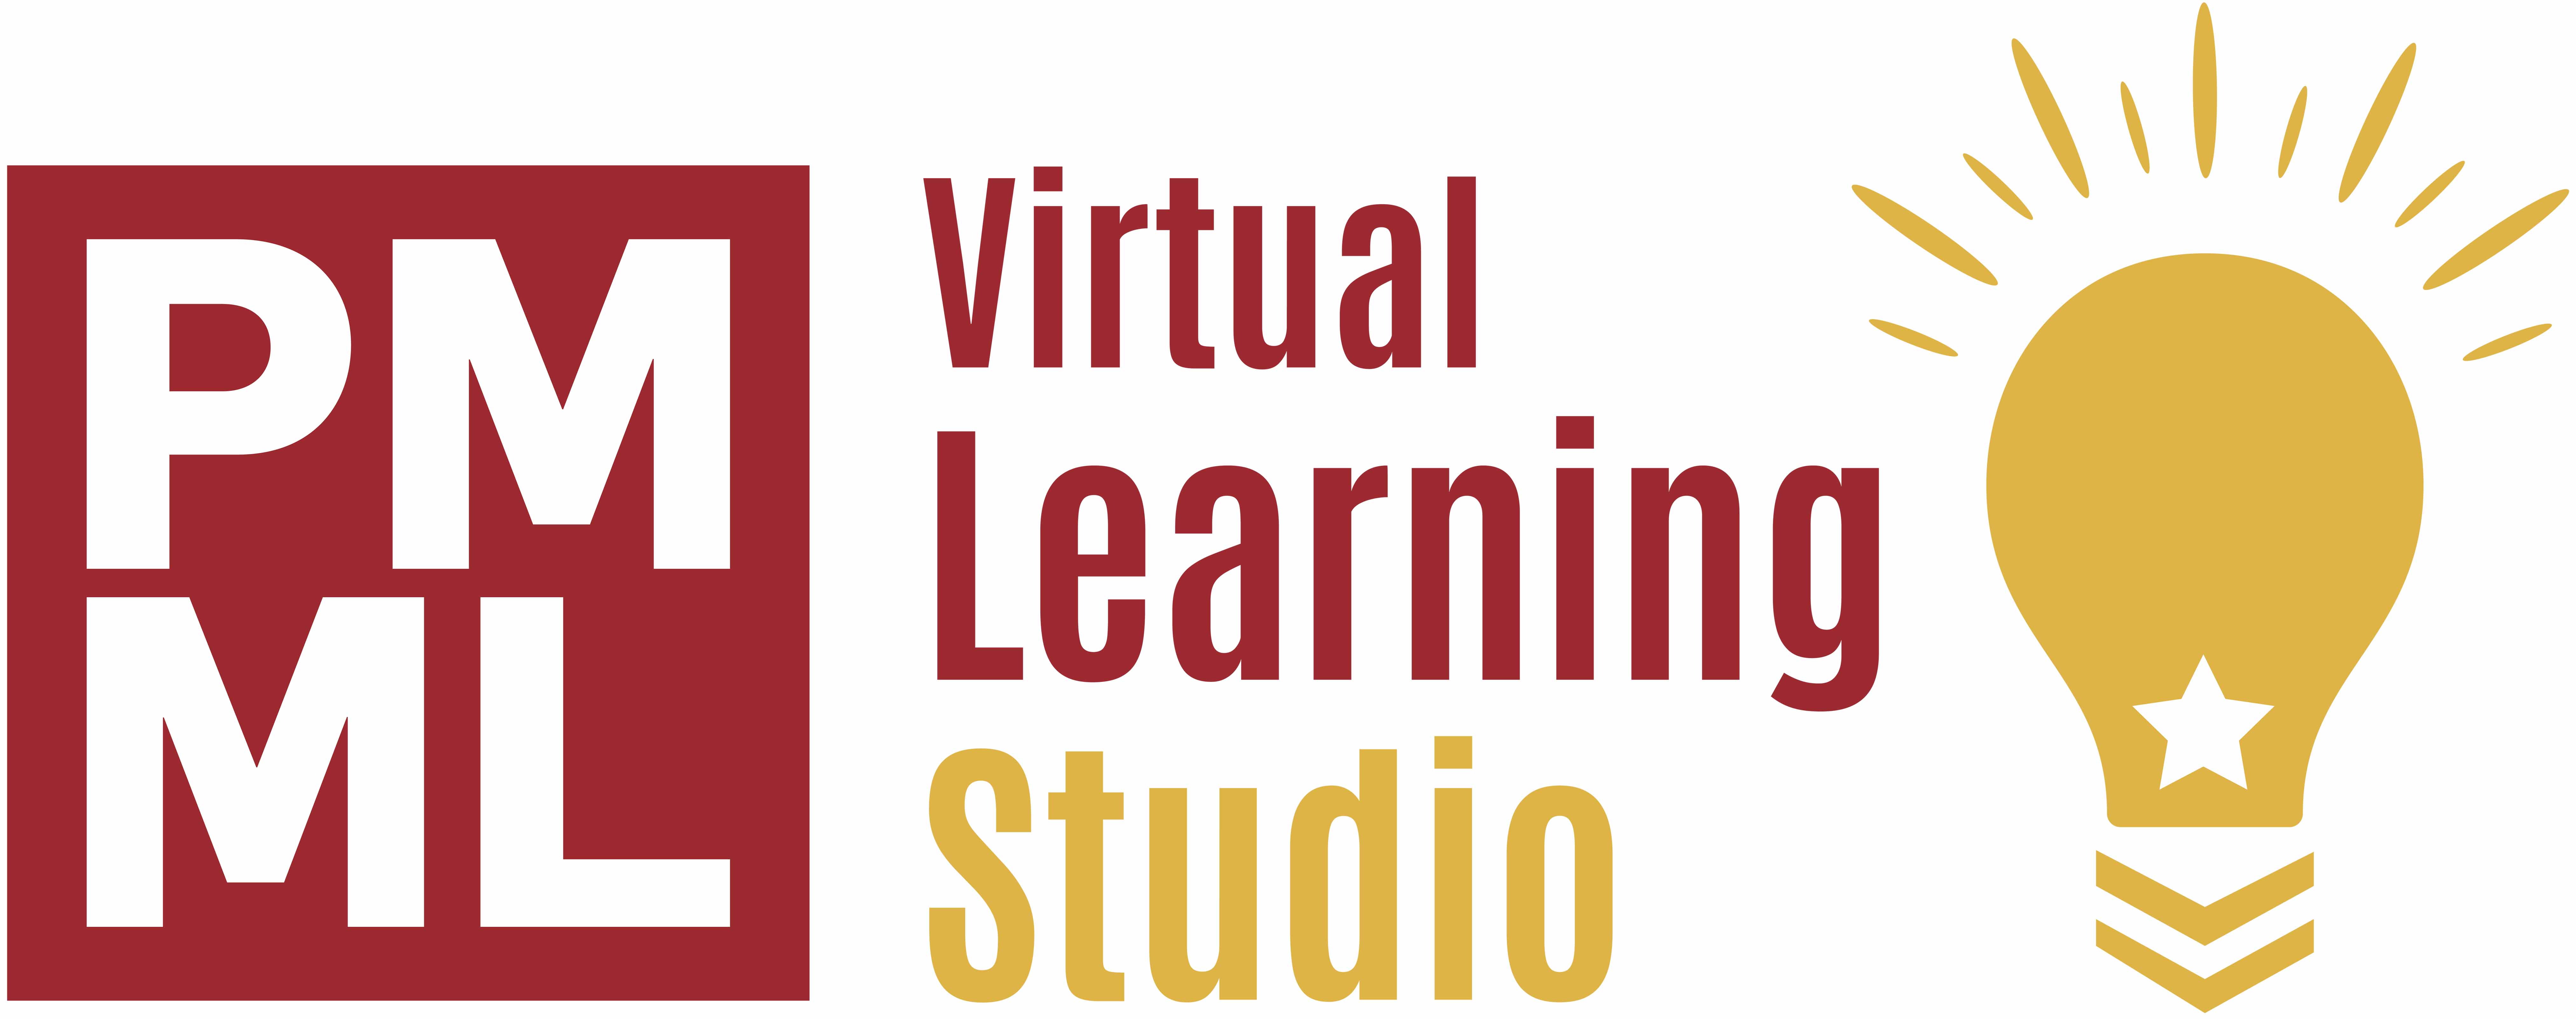 Virtual Learning Studio Logo